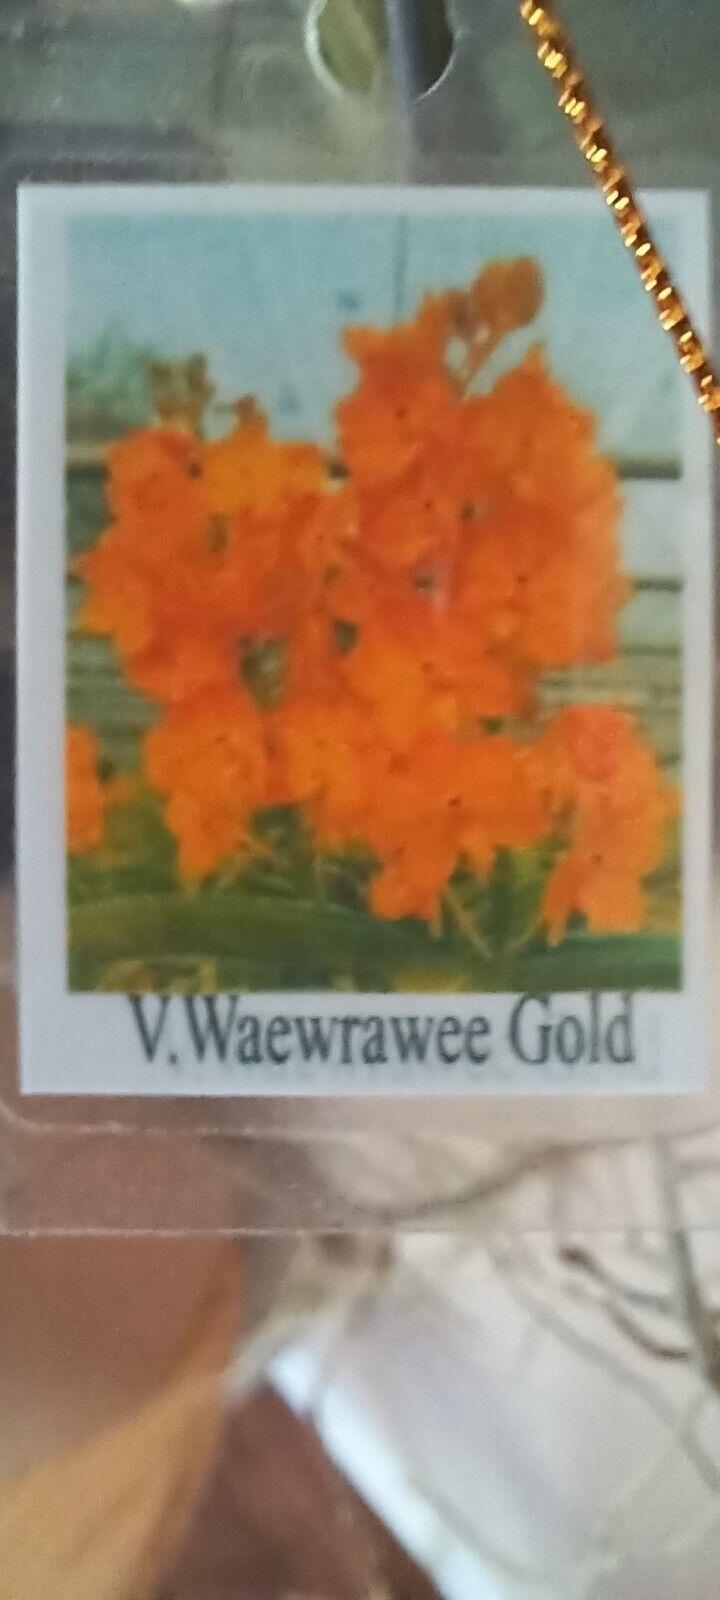 Orchid Vanda Waewrawee Gold sp Vaewrawee Micro Miniature Hanging